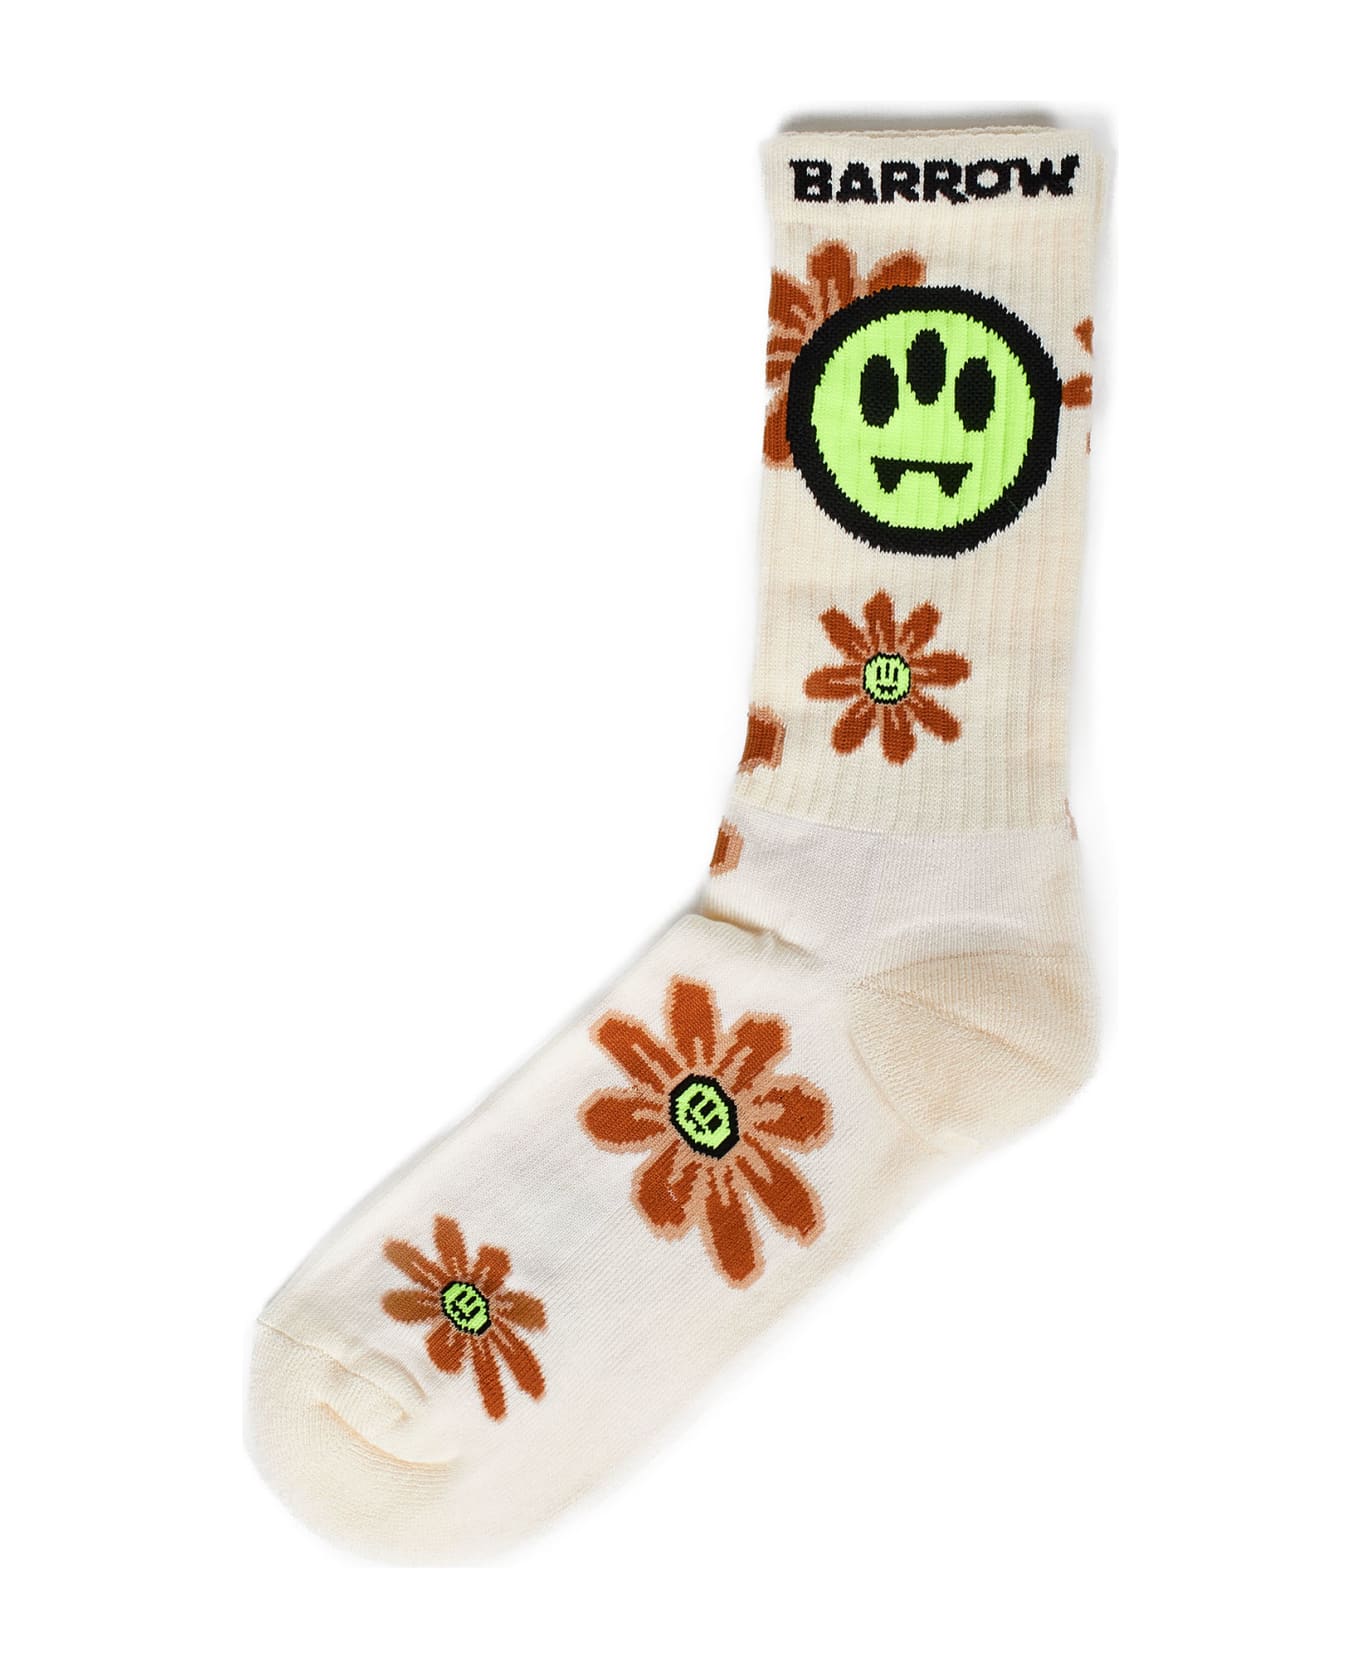 Barrow Socks - White, pink